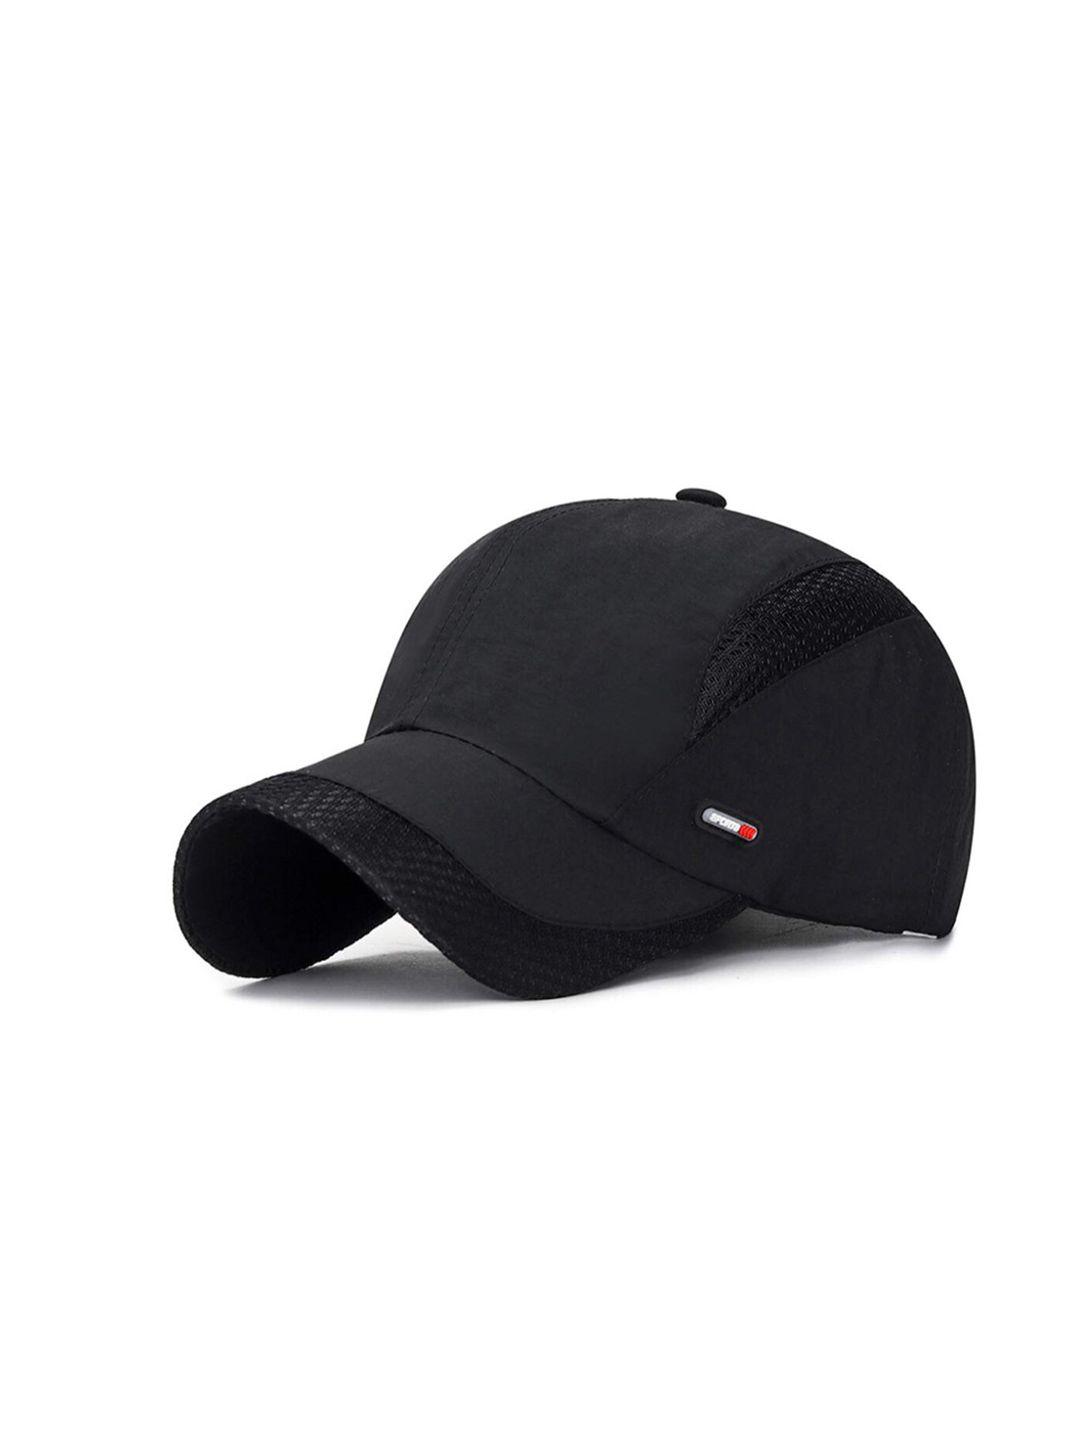 isweven lightweight snapback baseball cap